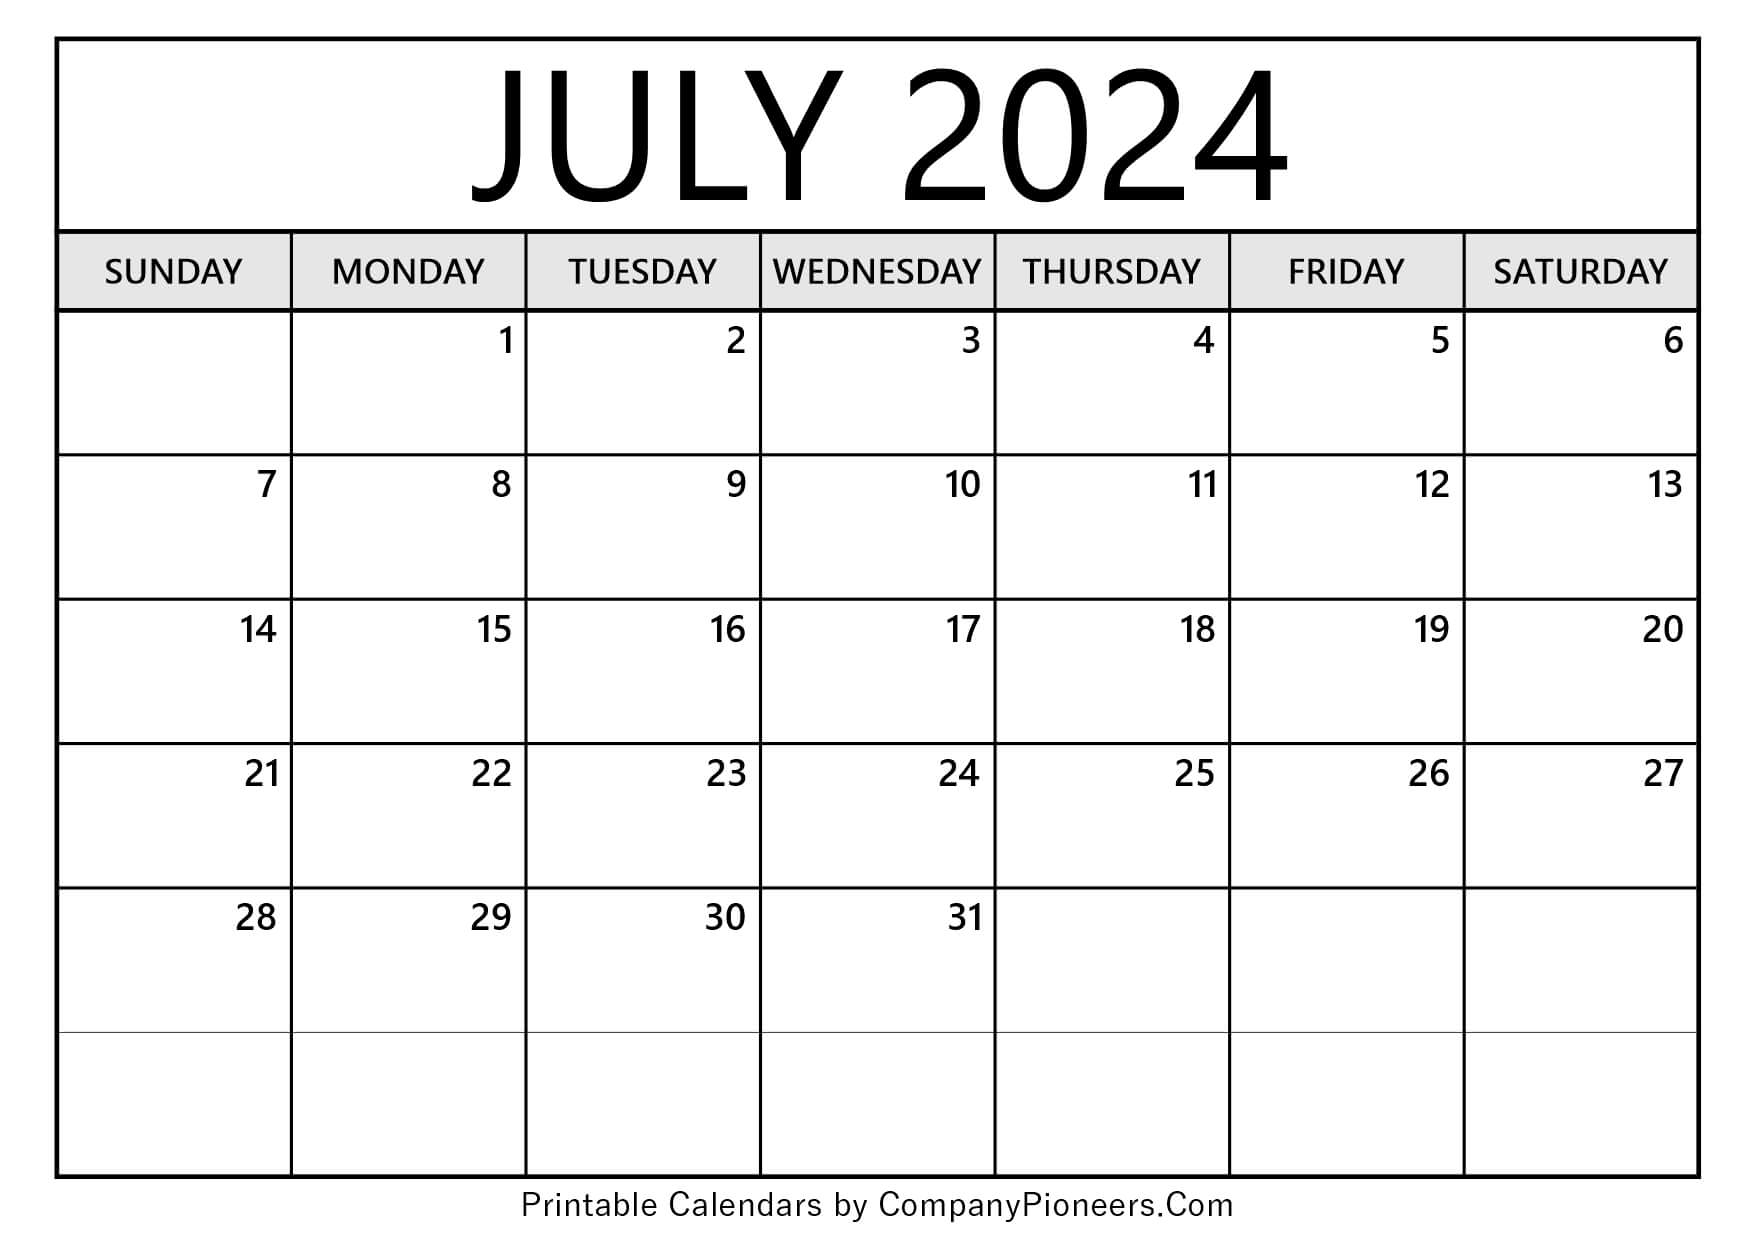 July 2024 Calendar Template Blank